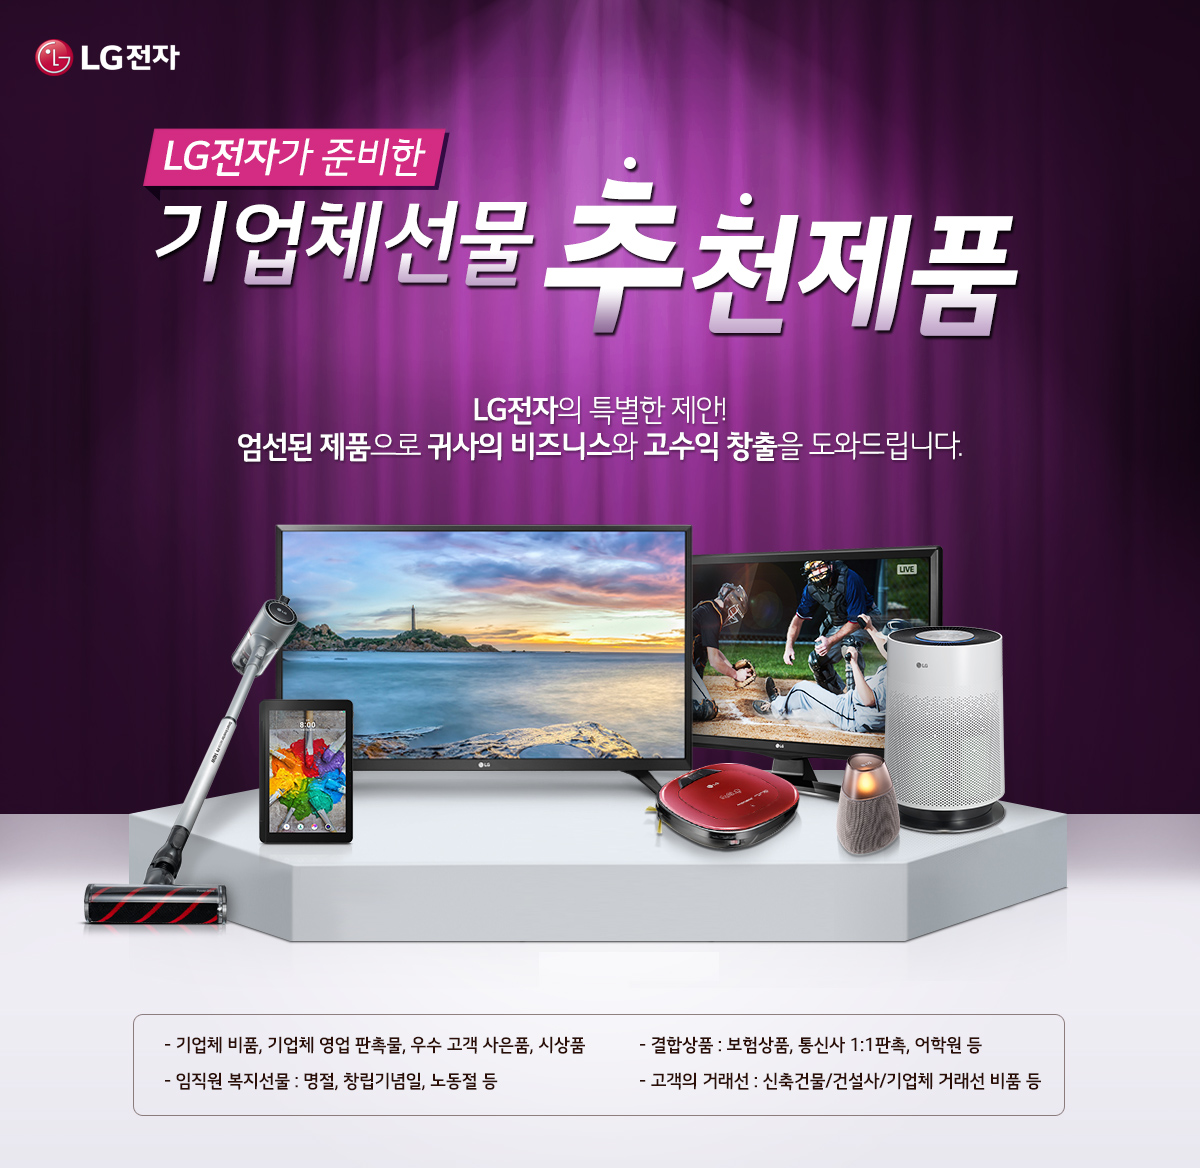 LG전자가 준비한 기업체 선물 추천 제품